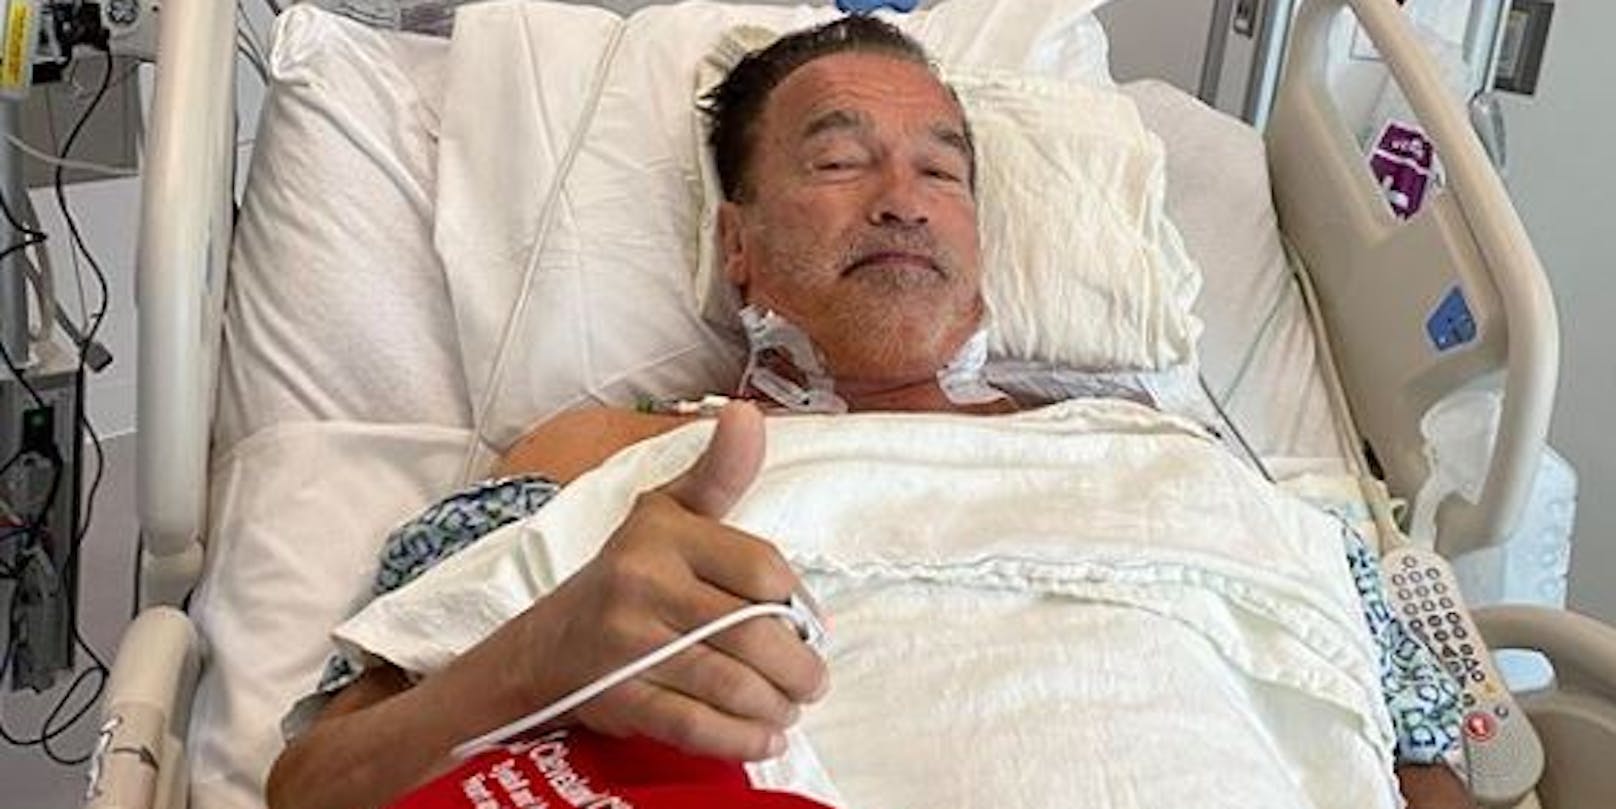 "I'll be back": Schauspieler Arnold Schwarzenegger im Spital